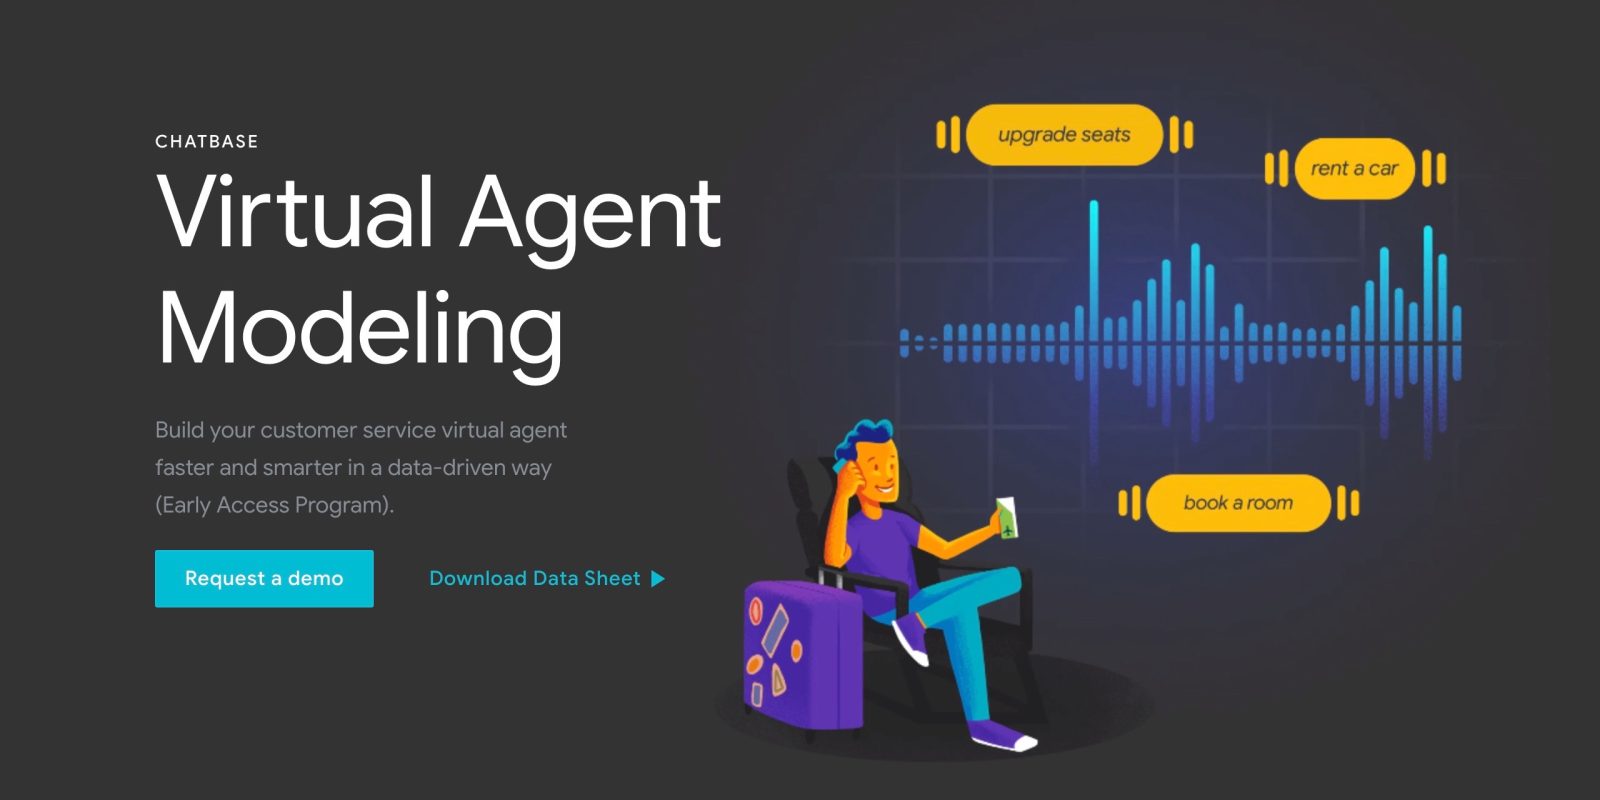 Chatbase Virtual Agent Modeling